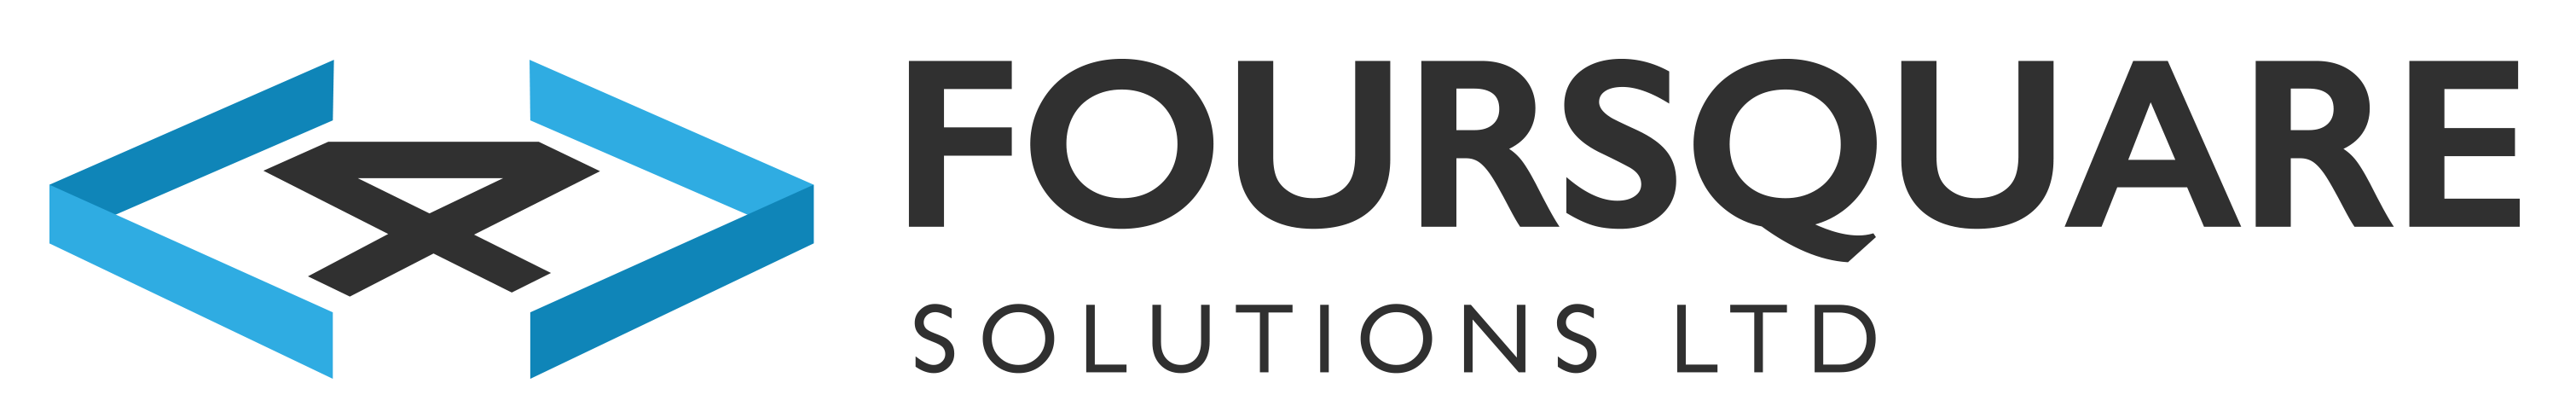 Foursquare Solutions UK Logo